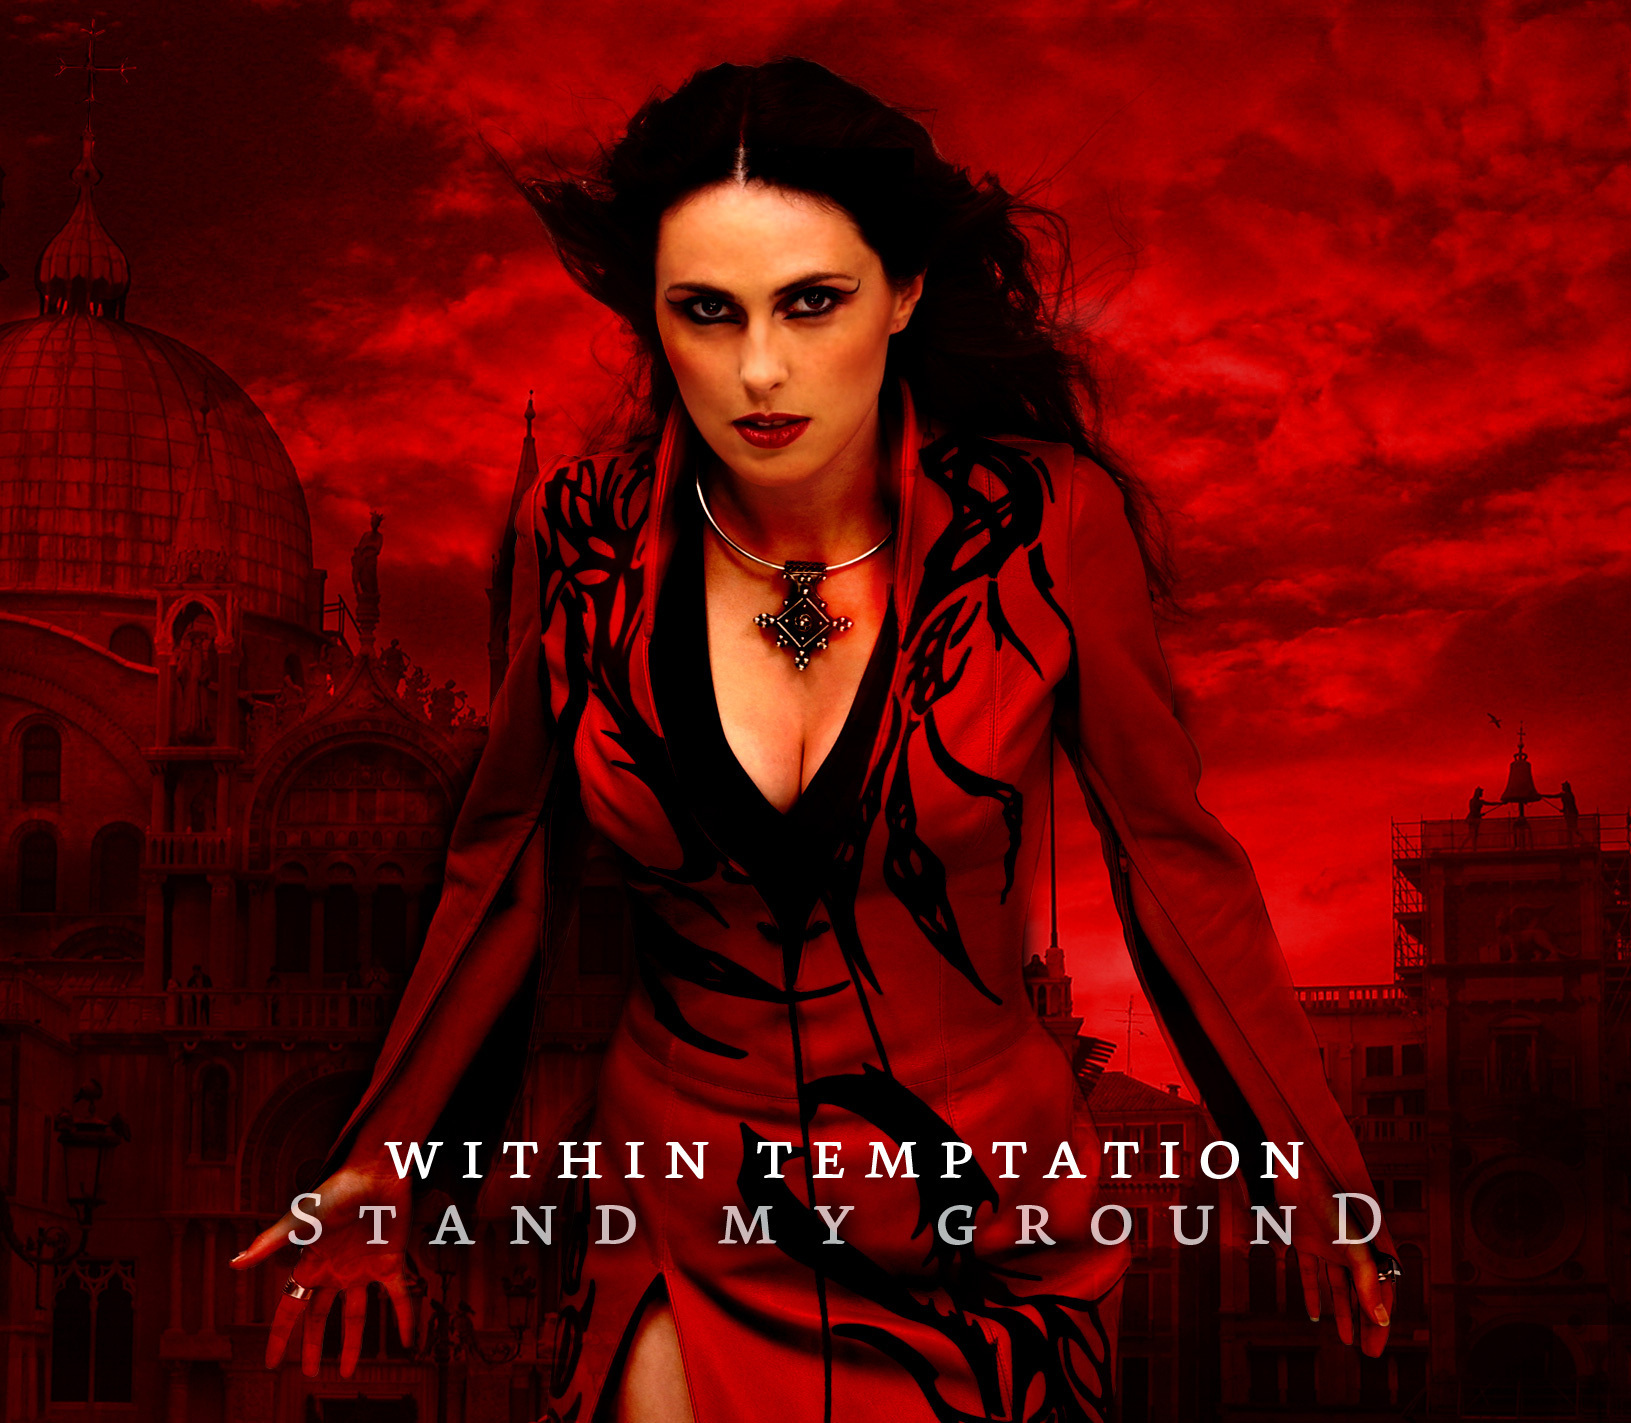 within temptation - Within Temptation Photo (2060683) - Fanpop